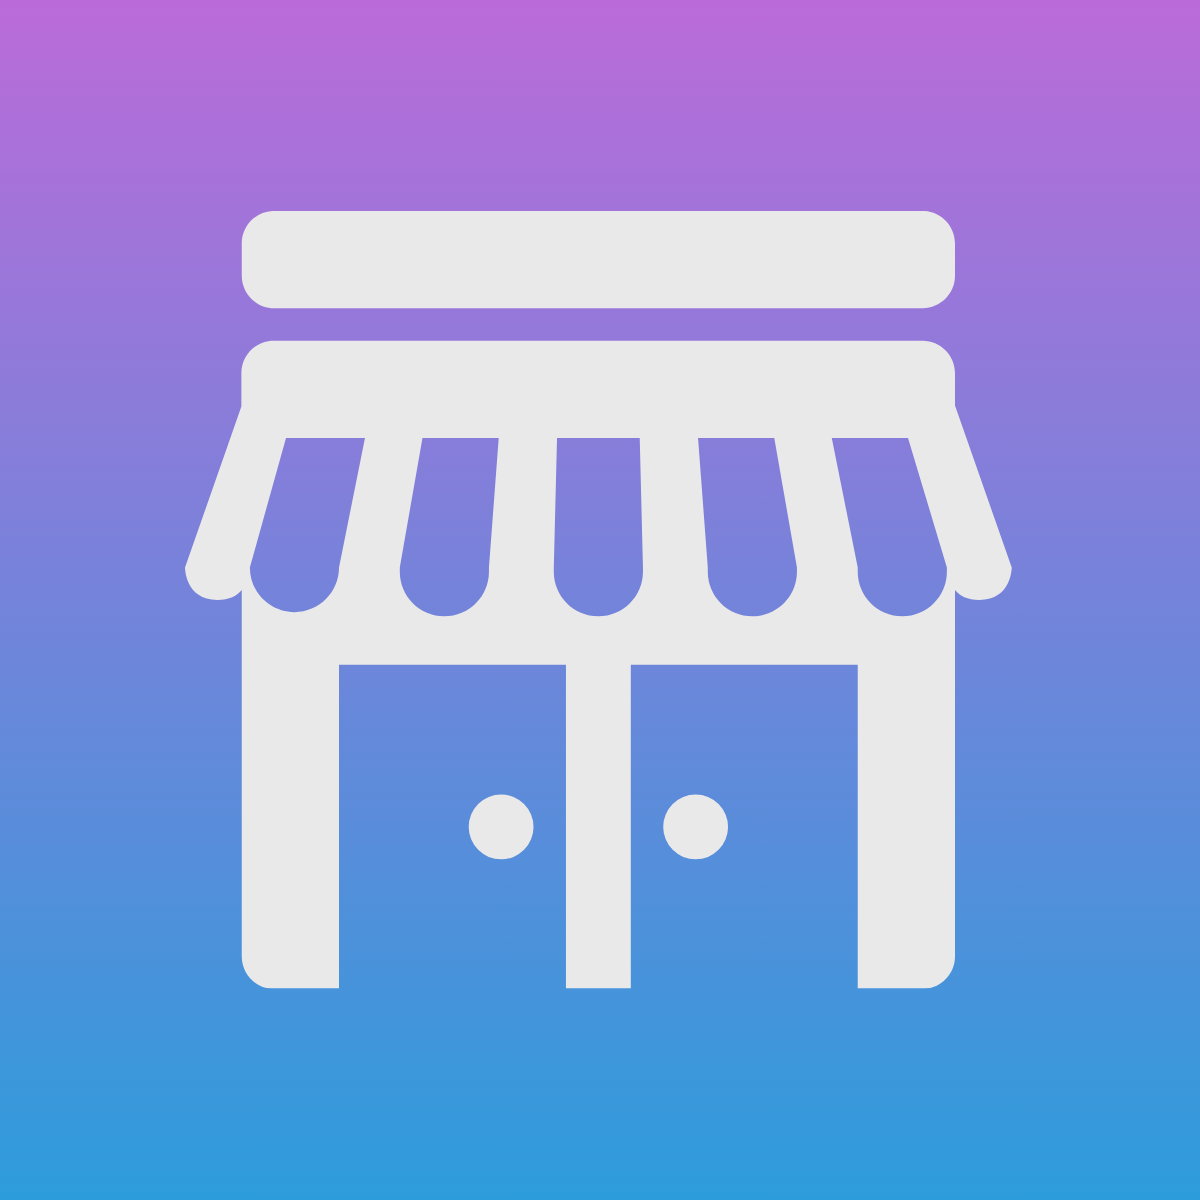 Evlop ‑ Marketplace for Shopify